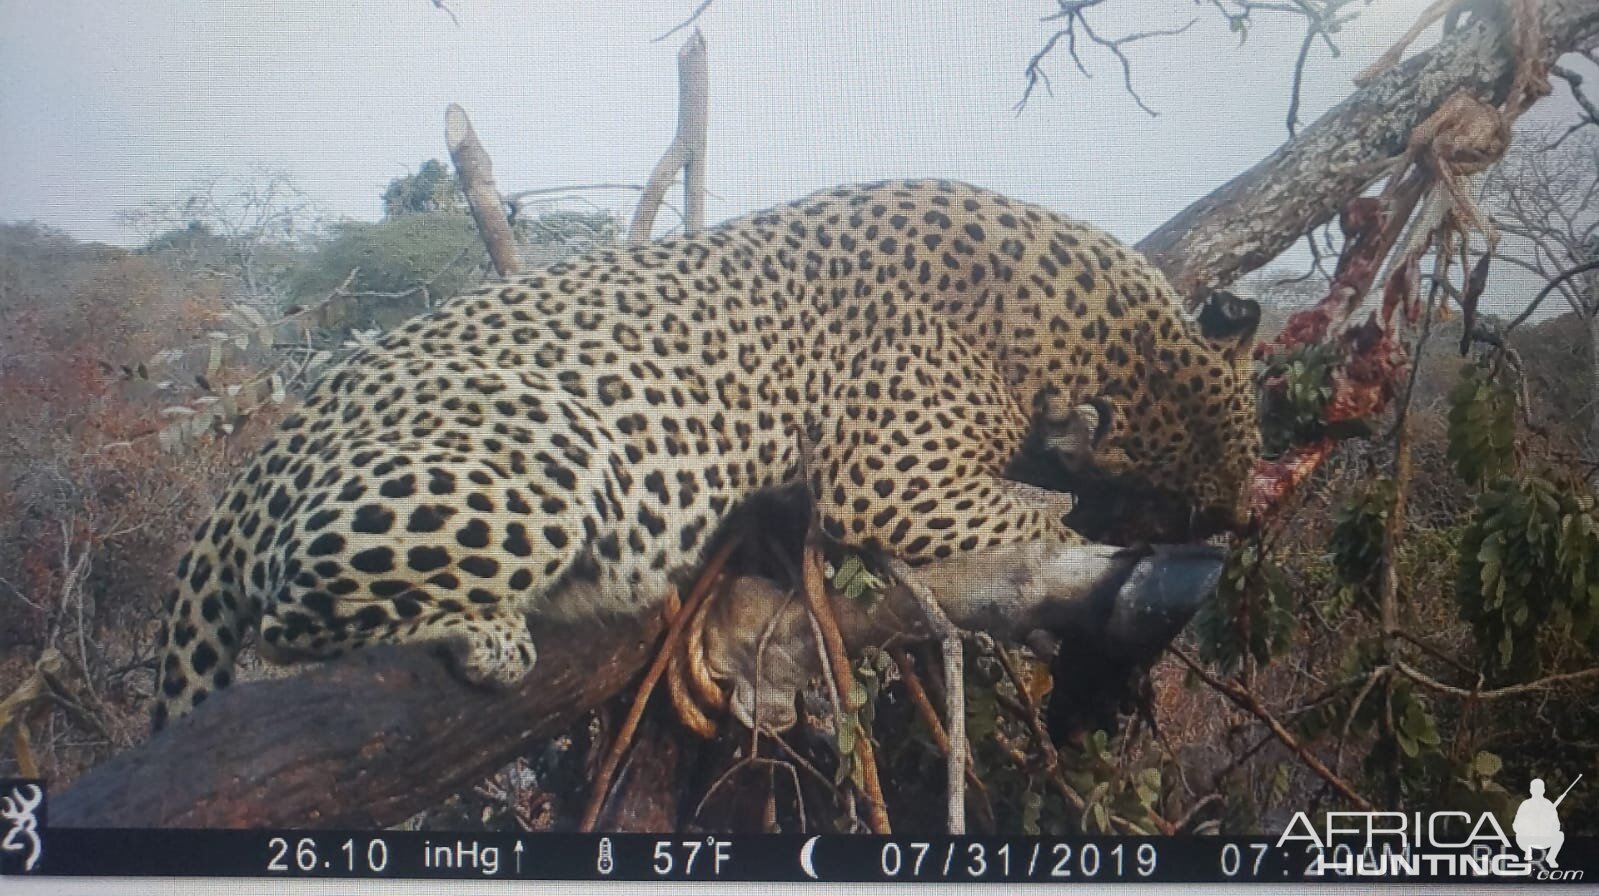 Tanzania  Trail Cam Pictures Leopard